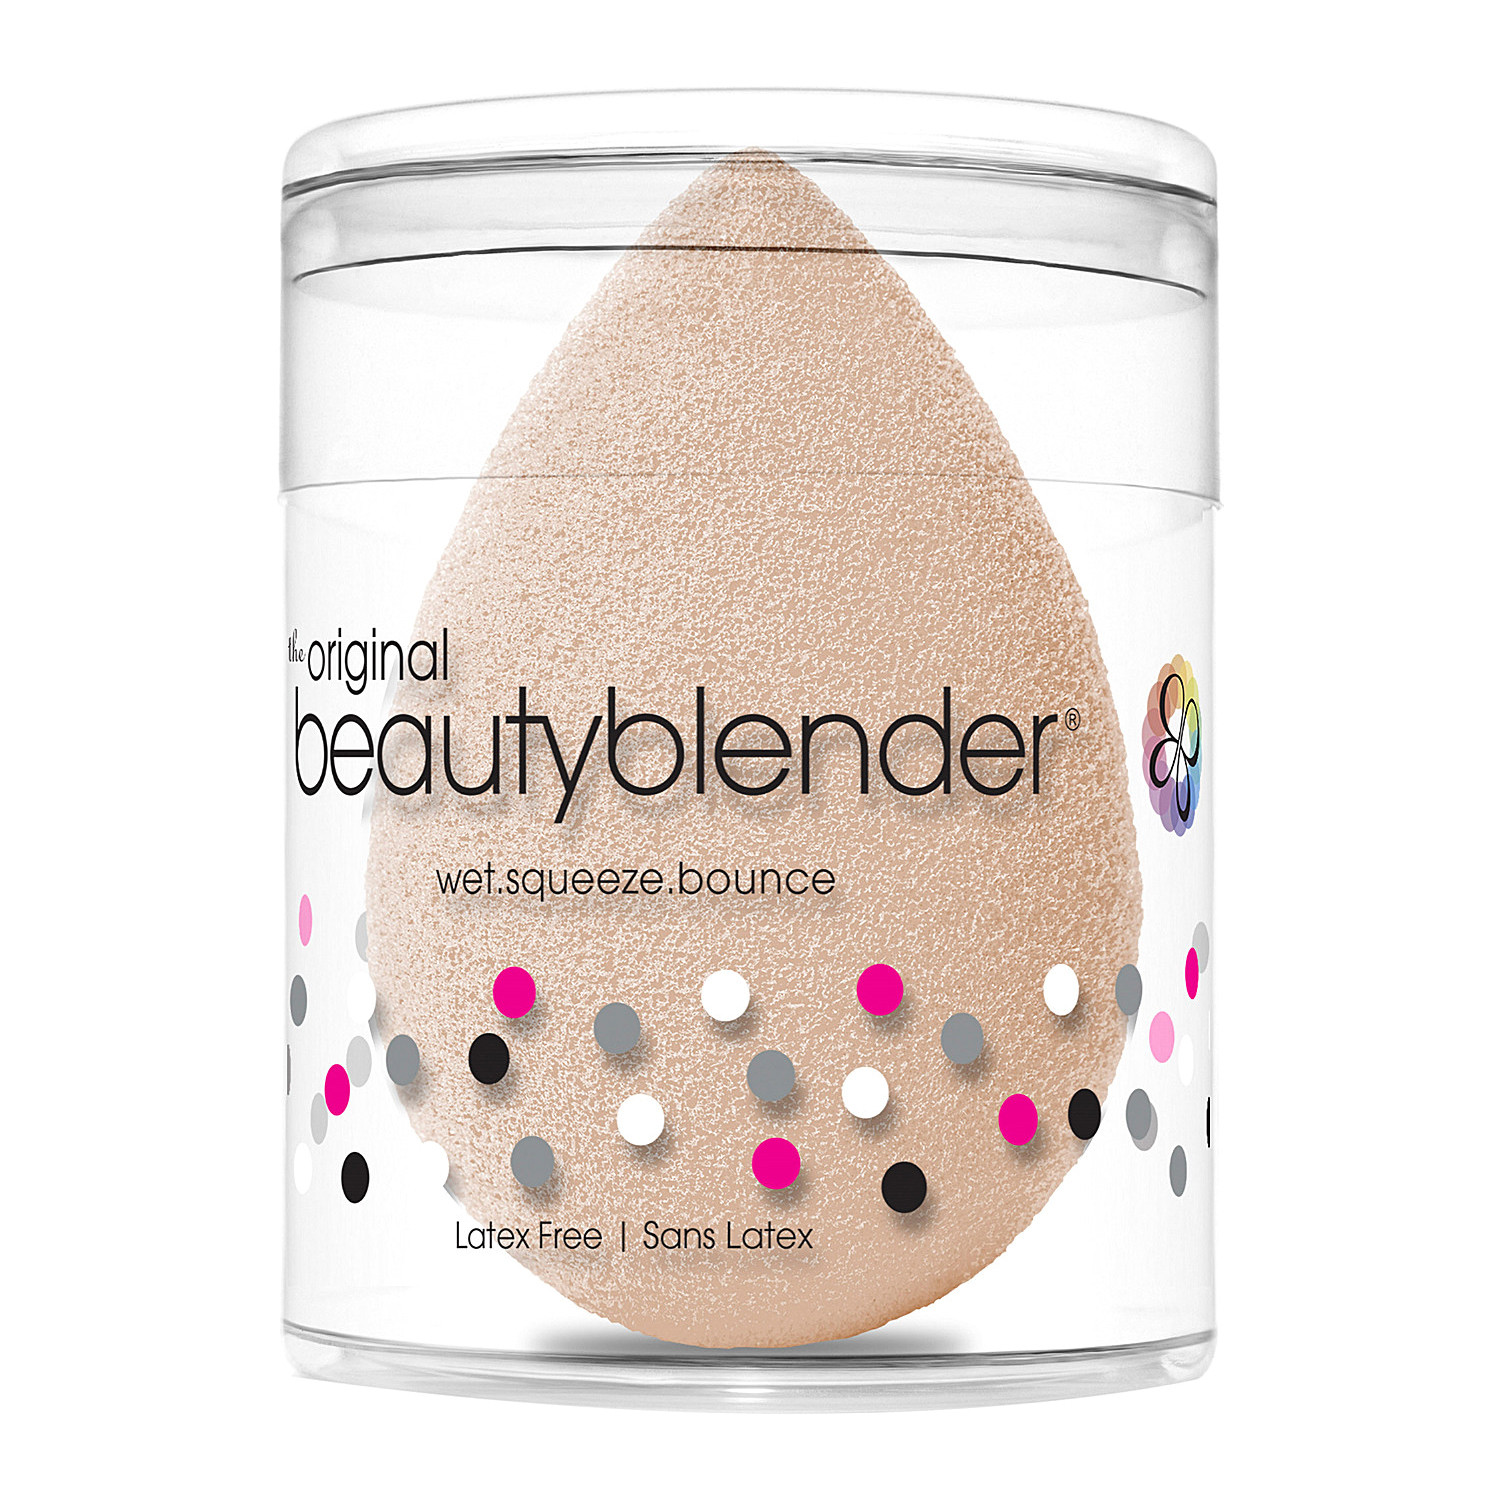 Beautyblender Nude Спонж для макияжа